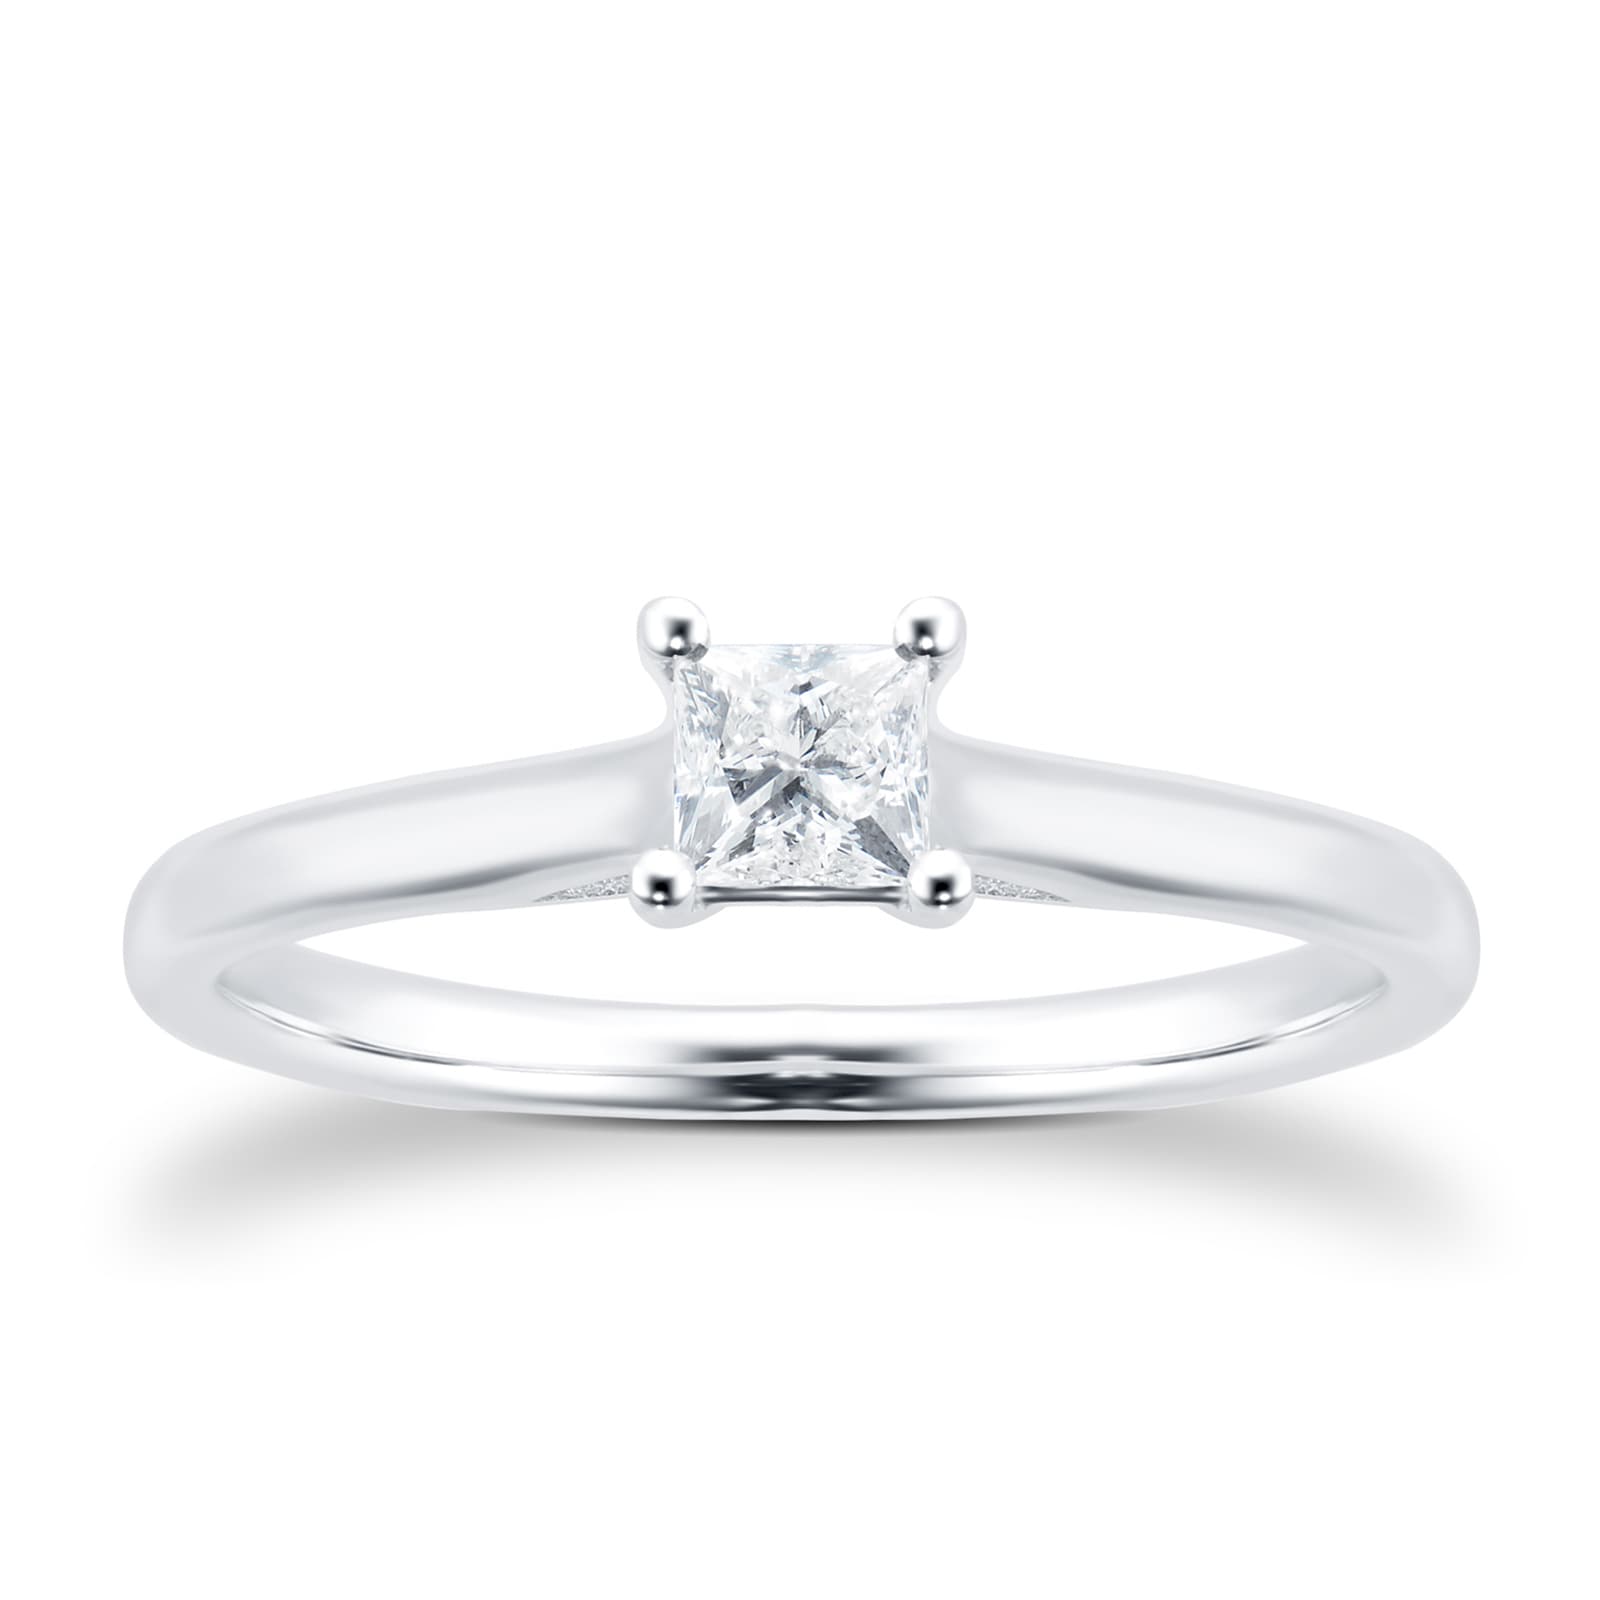 18ct White Gold 0.25ct Princess Cut Diamond Engagement Ring - Ring Size M